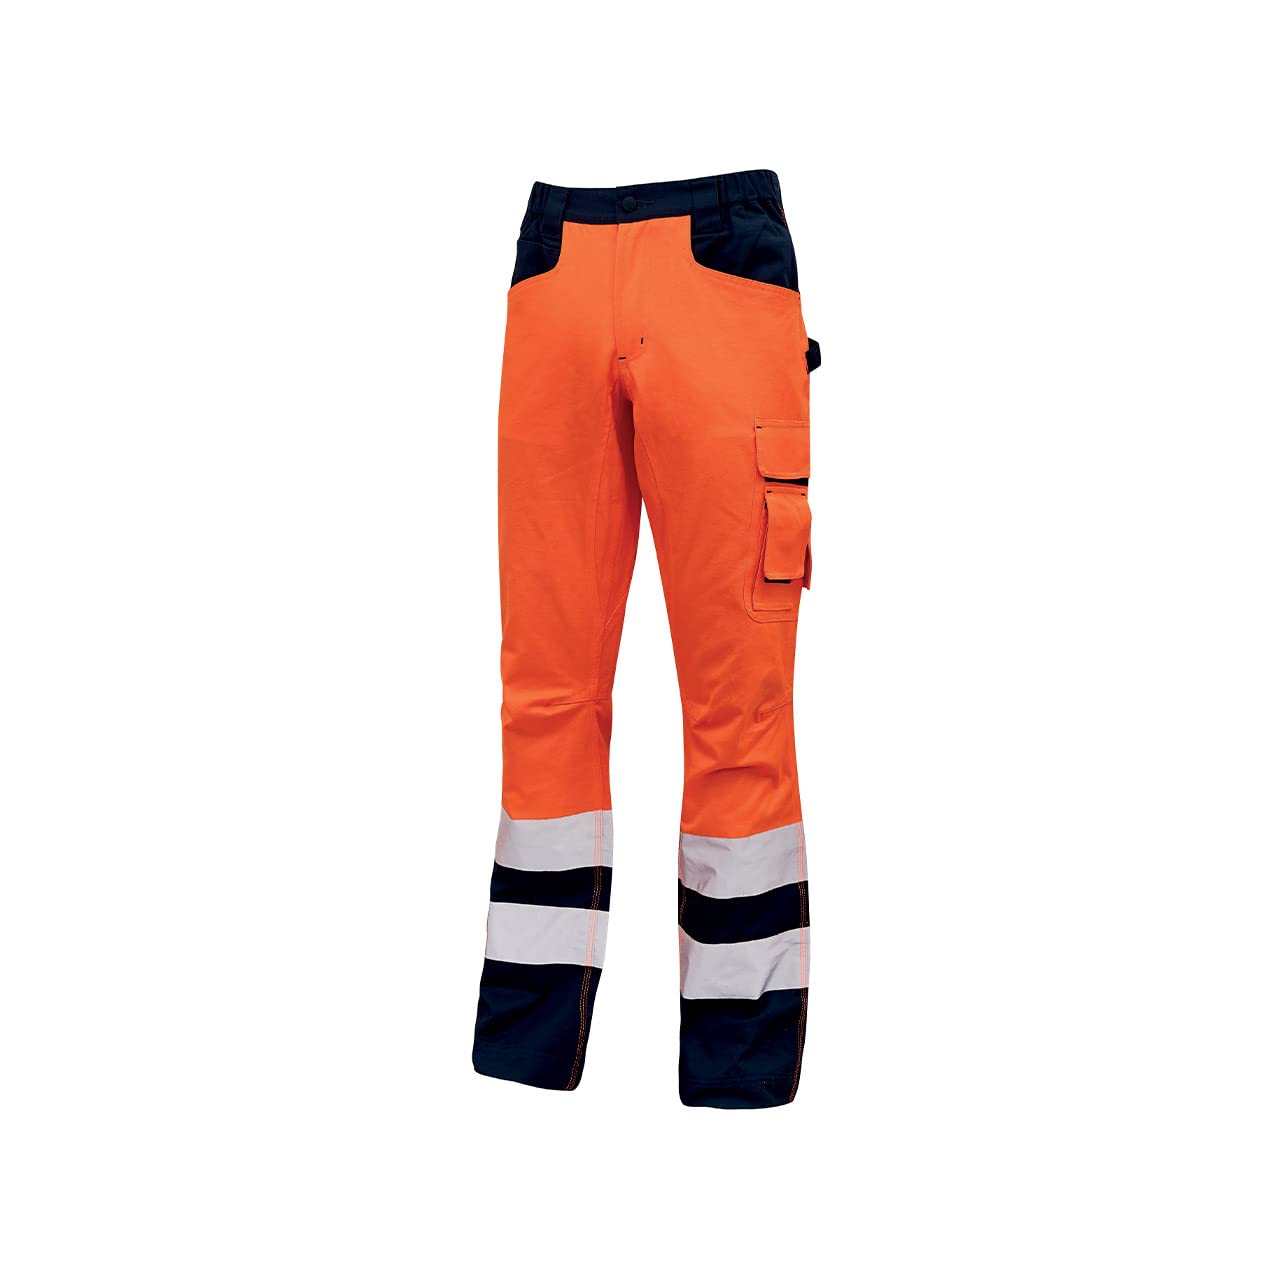 Pantalone alta visibilita light arancione fluo tg.xxl